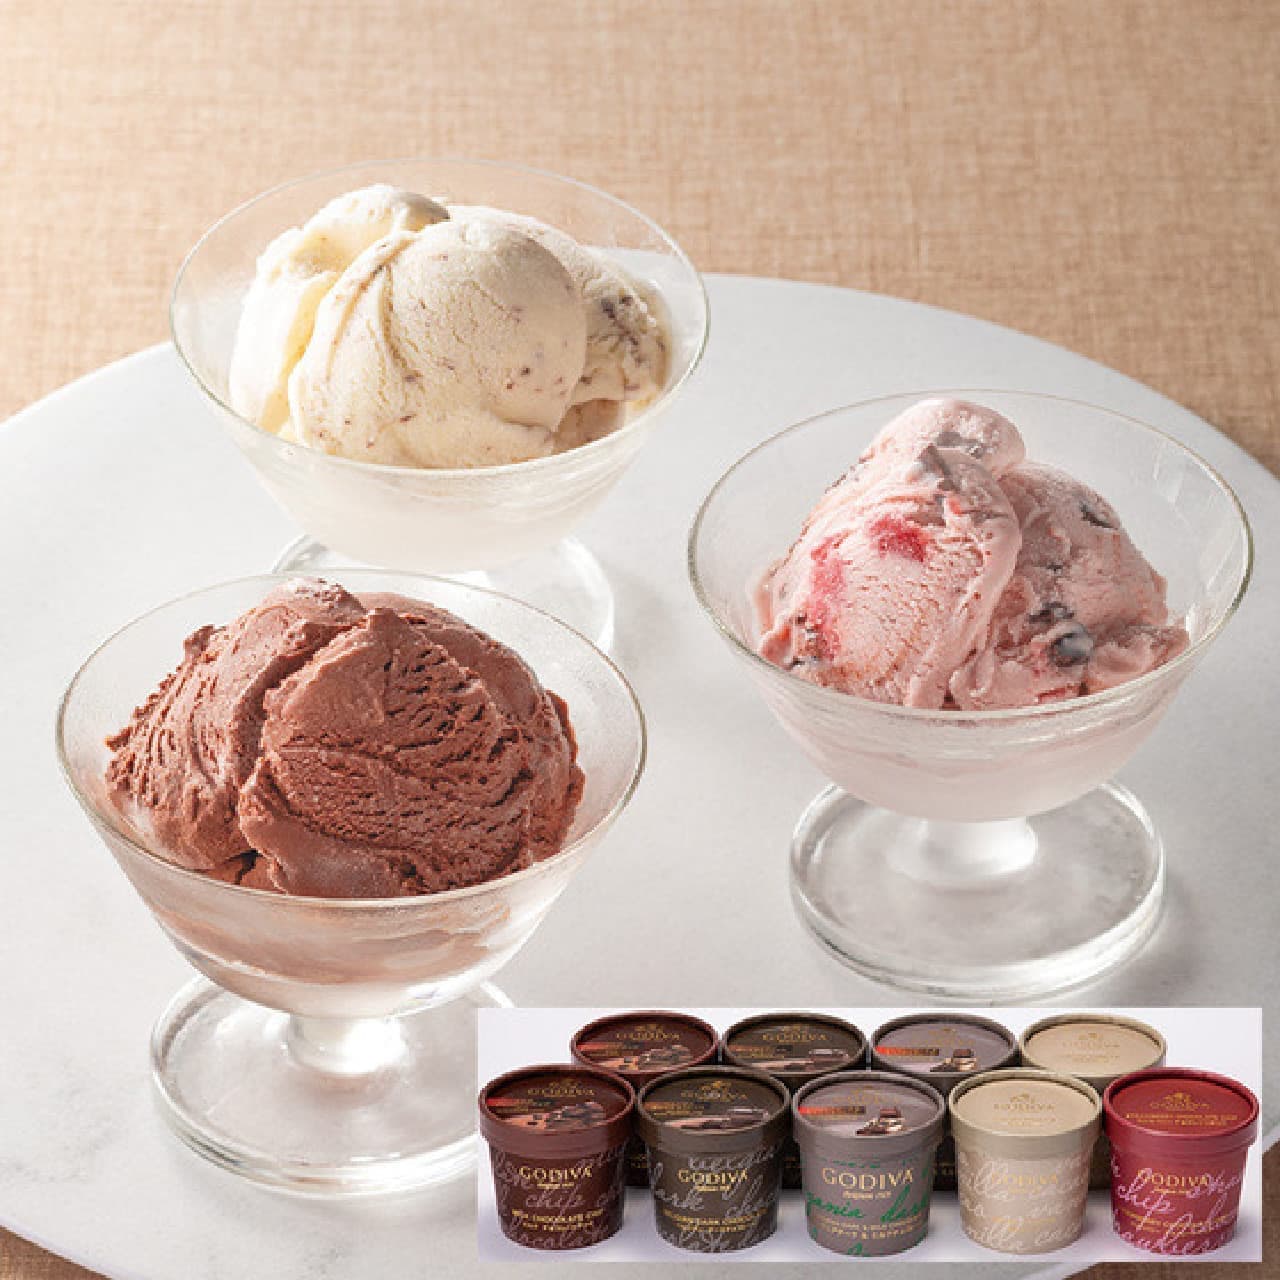 7-Eleven Mid-Year Gift Collection - Godiva Ice Cream, Sugar Butter Tree, etc.